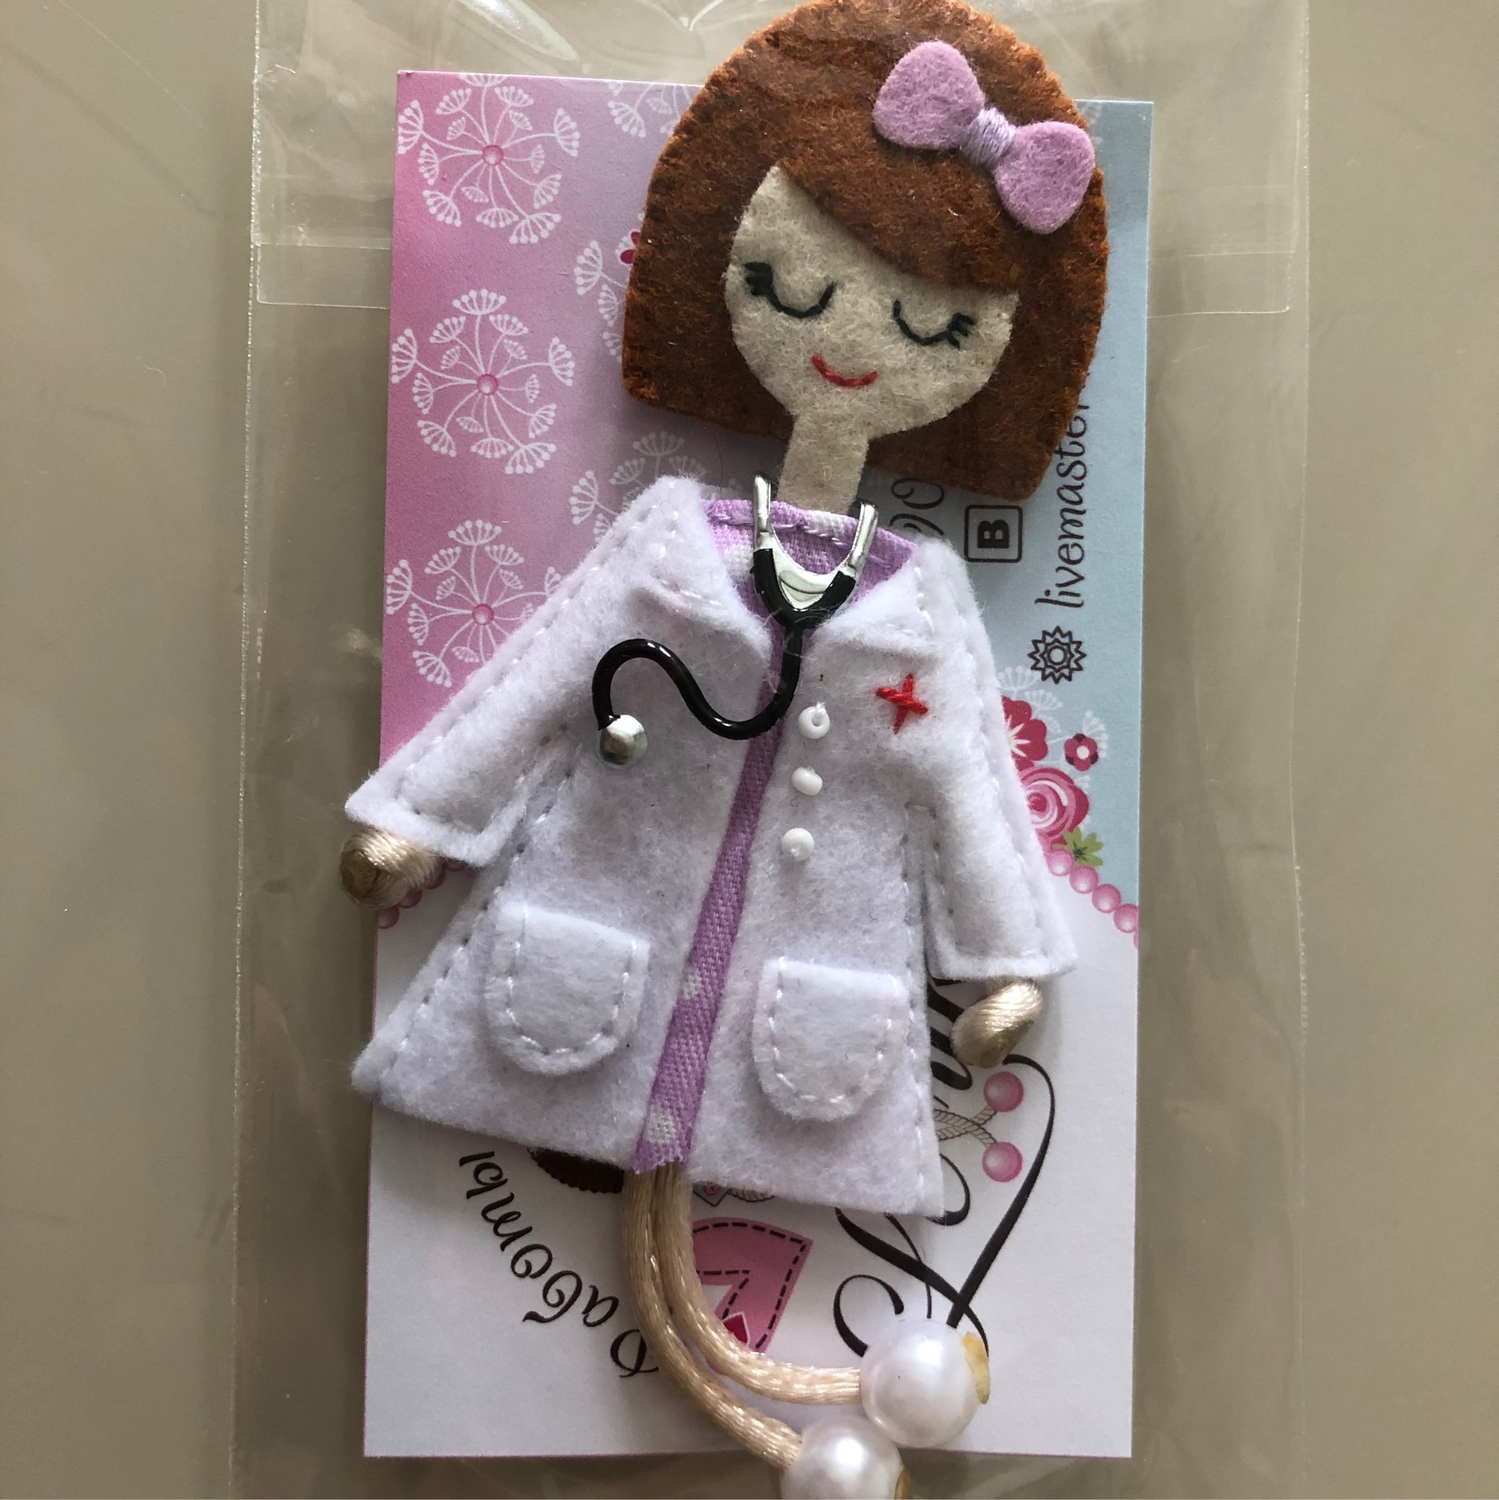 Photo №1 к отзыву покупателя Irina о товаре Брошка-куколка из фетра "Врач терапевт" с фонендоскопом